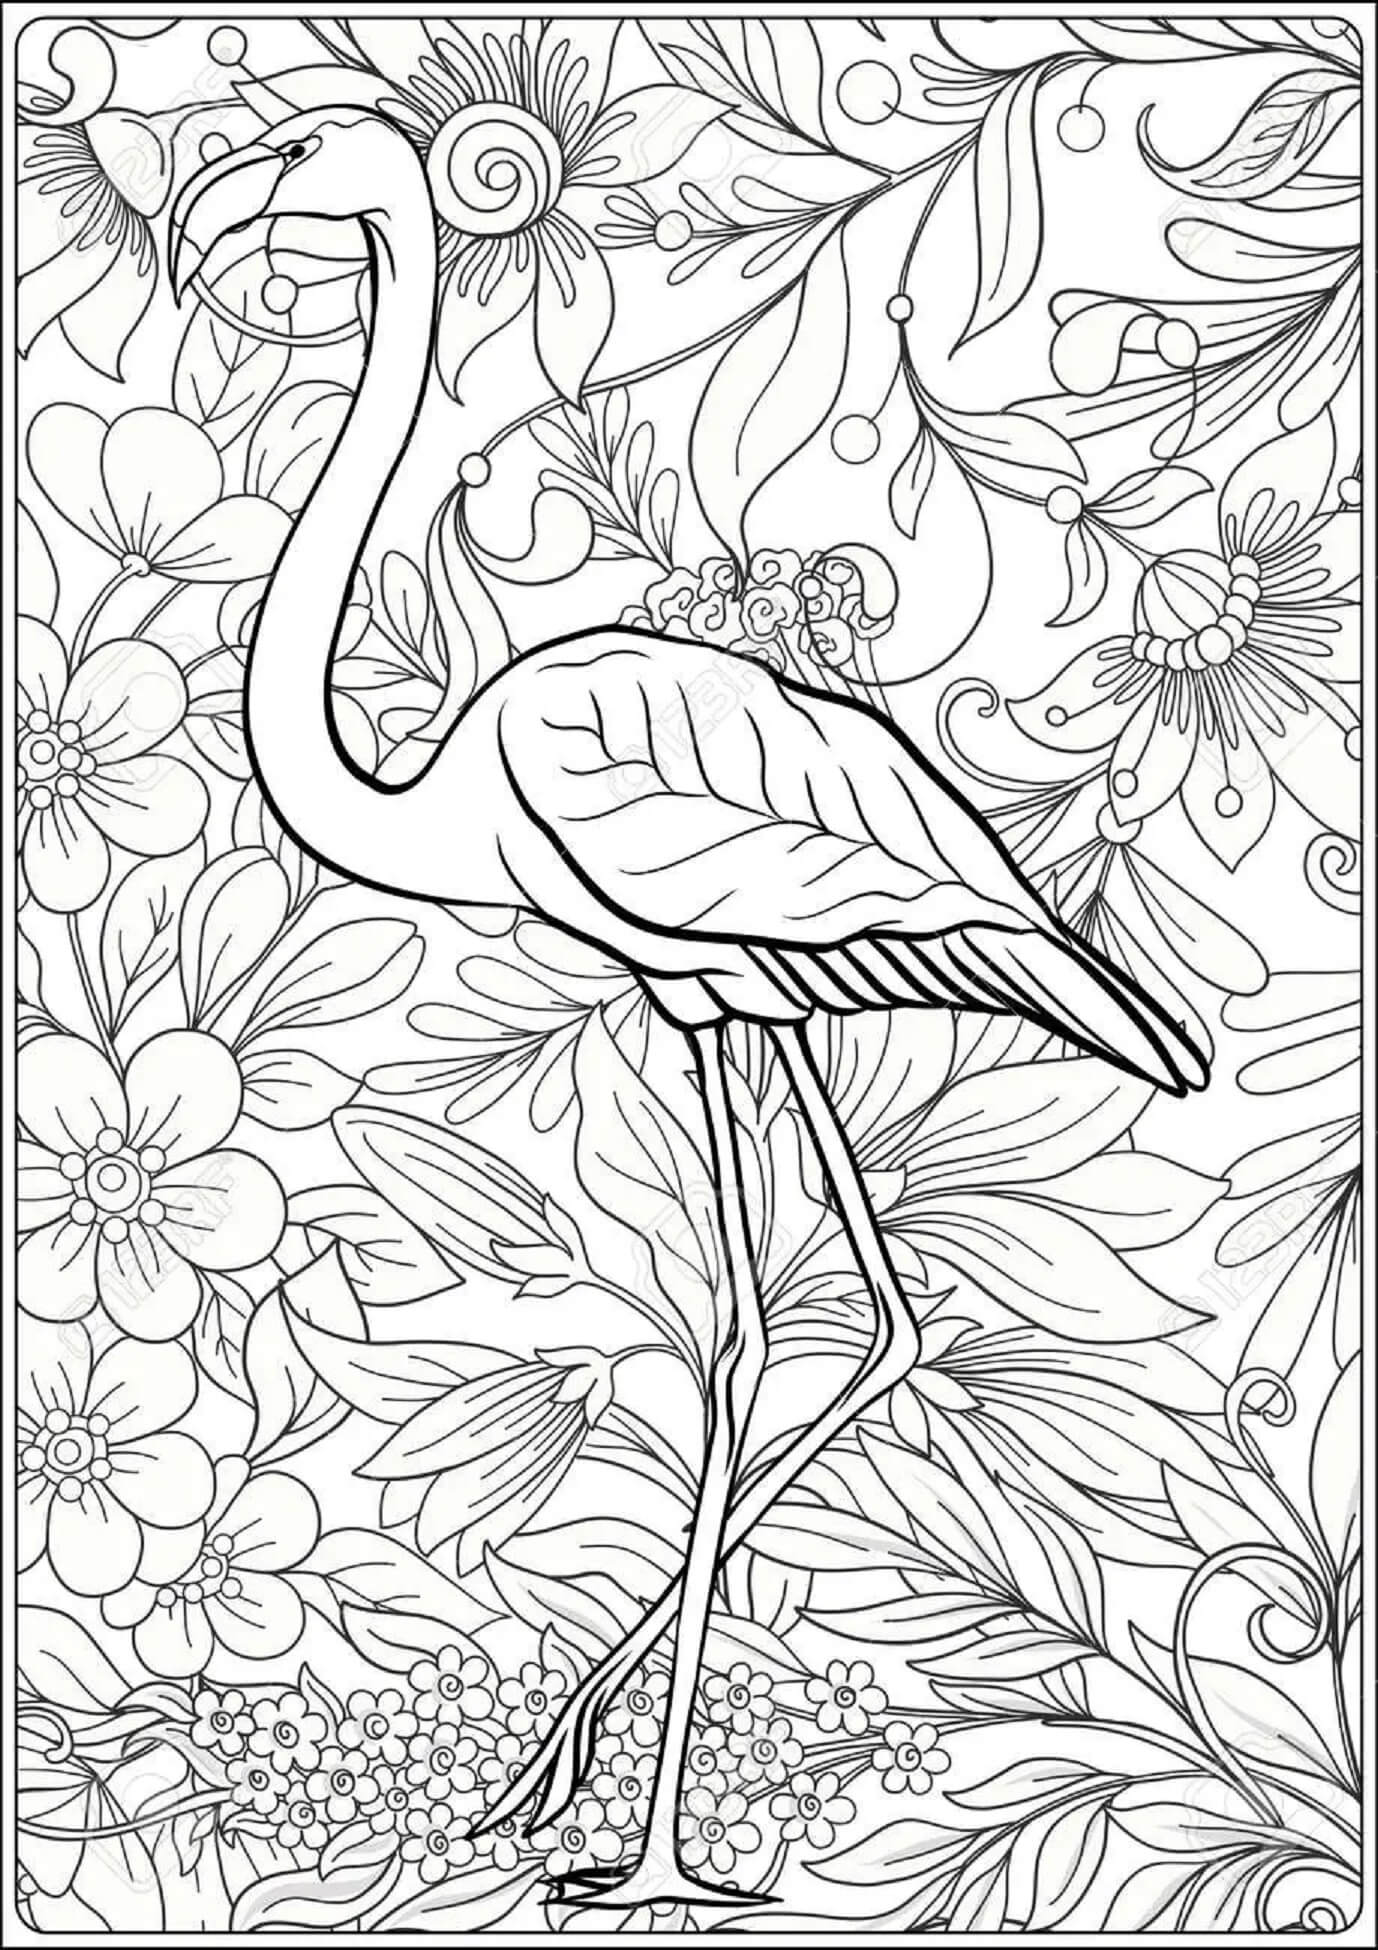 Mandala Flamingo Coloring Page -Sheet 2 Mandalas